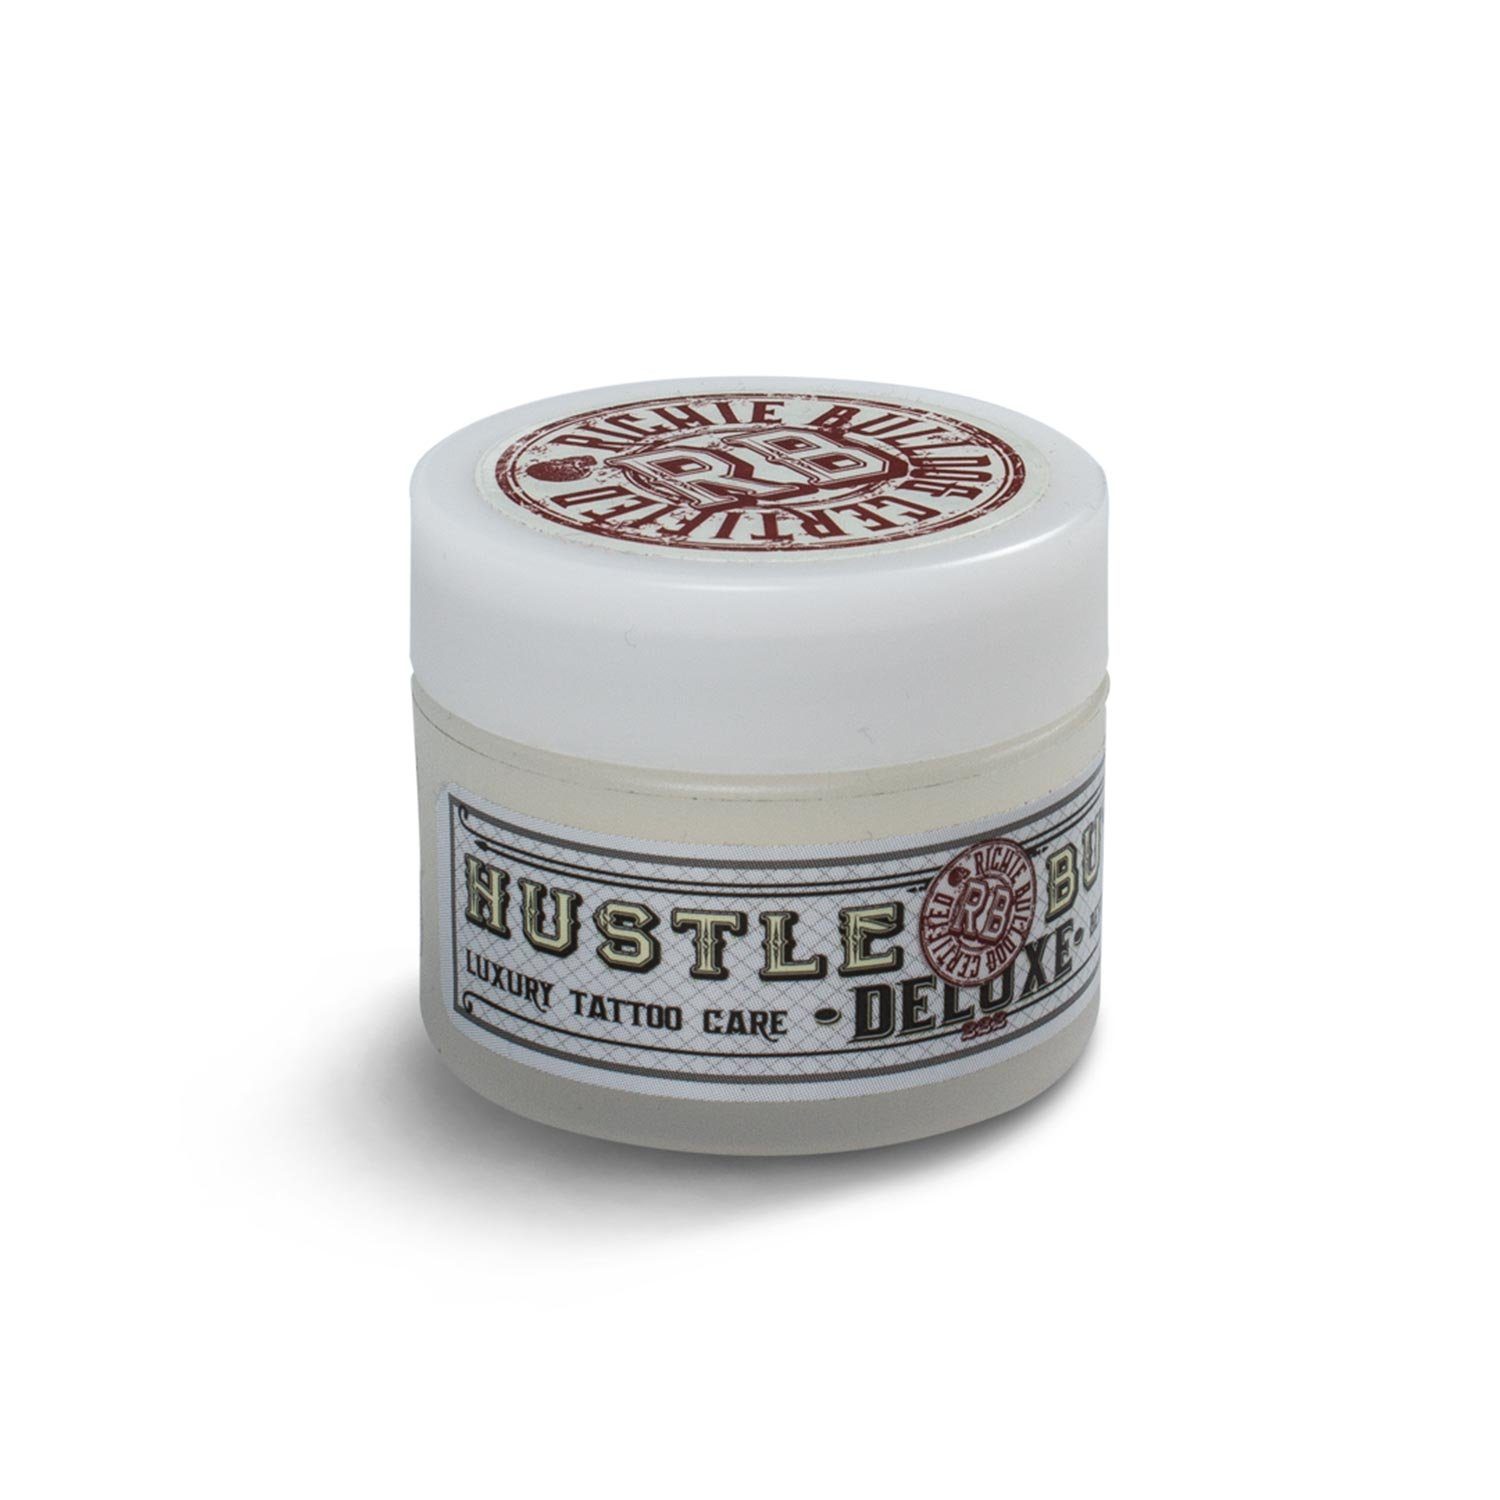 Organic Deluxe Feuchtigkeitscreme Butter Creme Tattoo Hustle